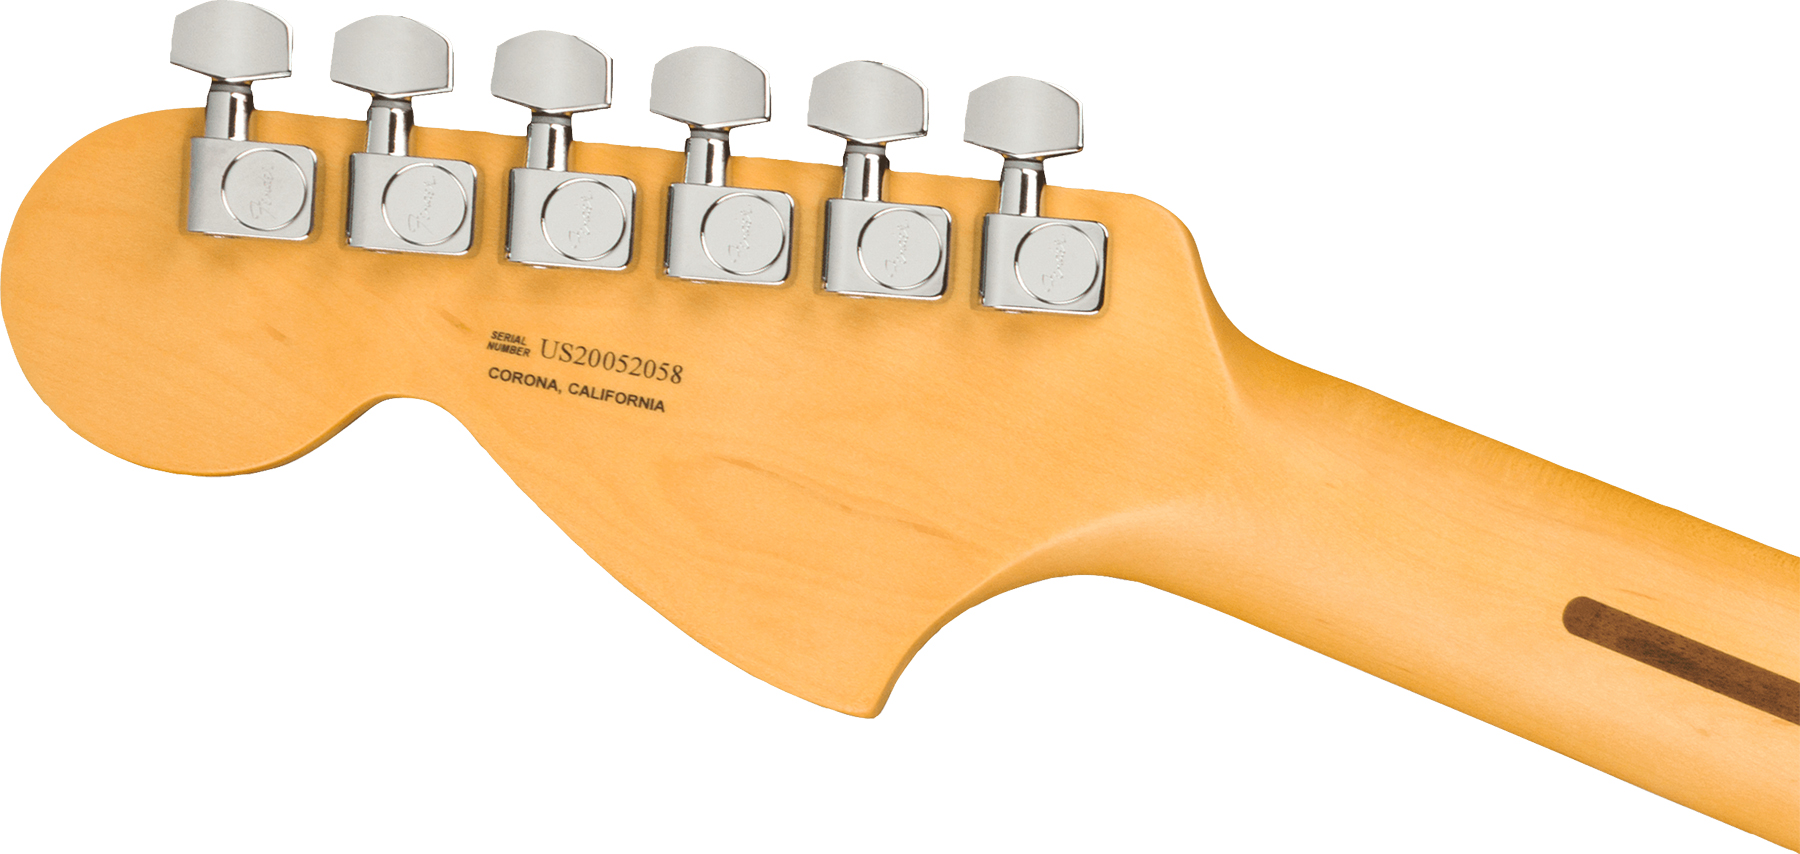 Fender Tele Deluxe American Professional Ii Usa Rw - Mercury - Televorm elektrische gitaar - Variation 1